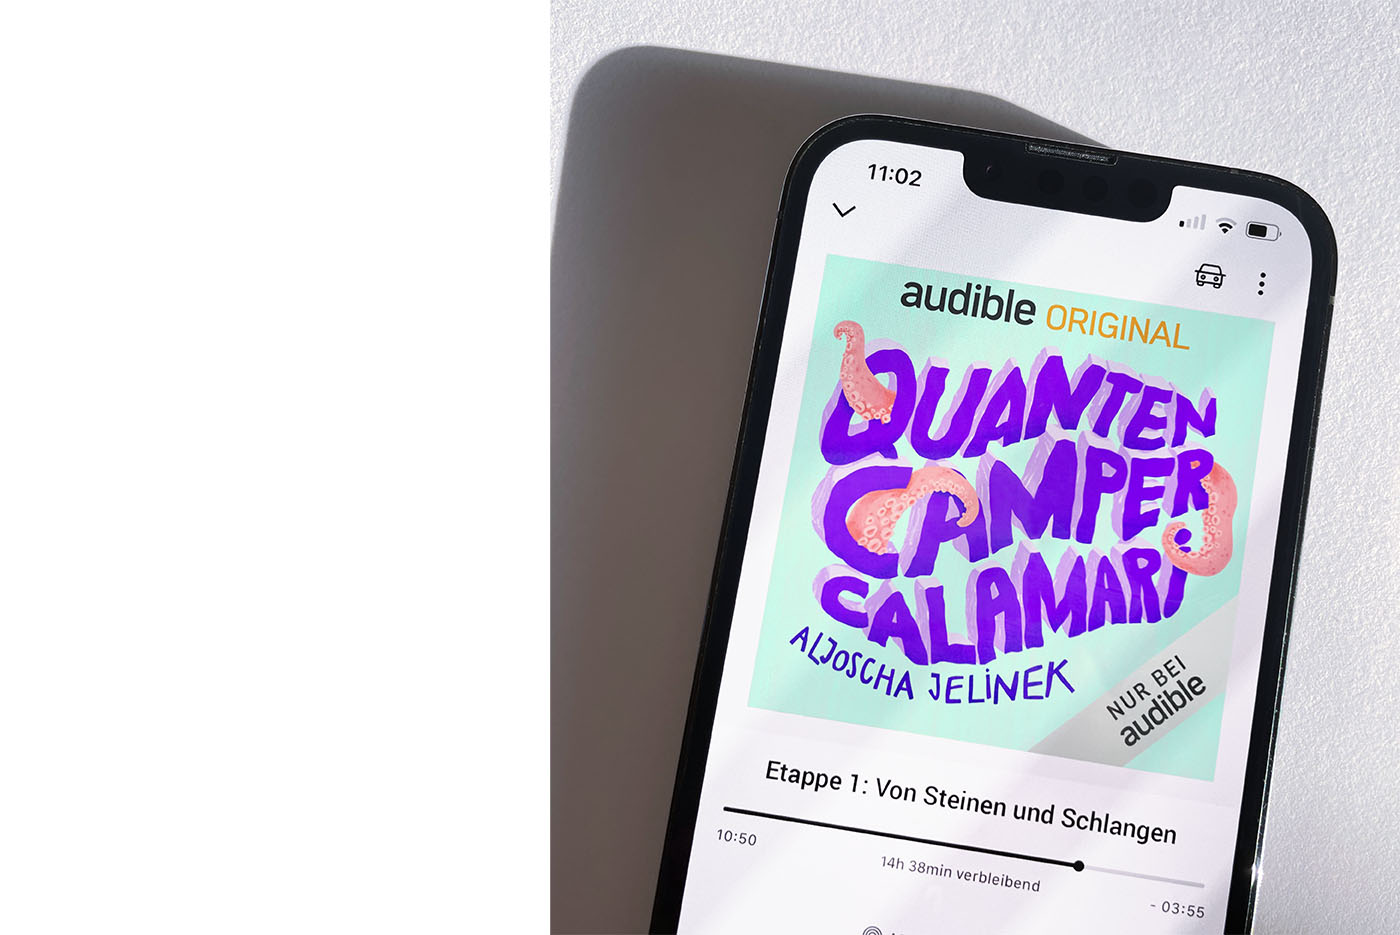 Quanten Camper Calamari – Cover Design by studio_upstruct